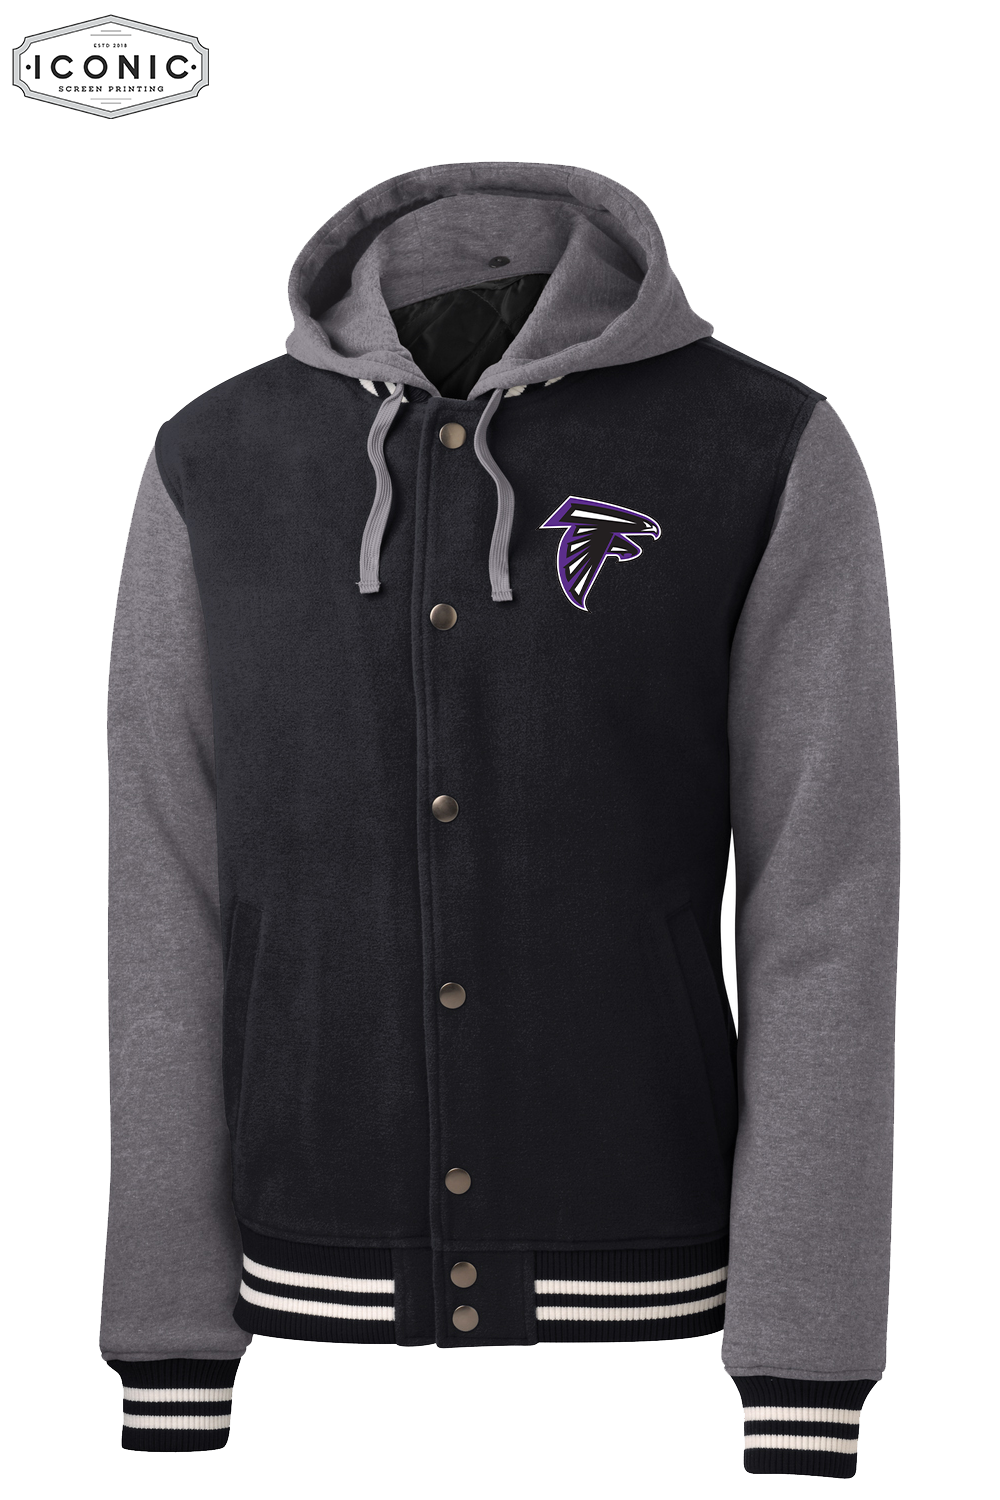 Falcons - Sport-Tek Insulated Letterman Jacket